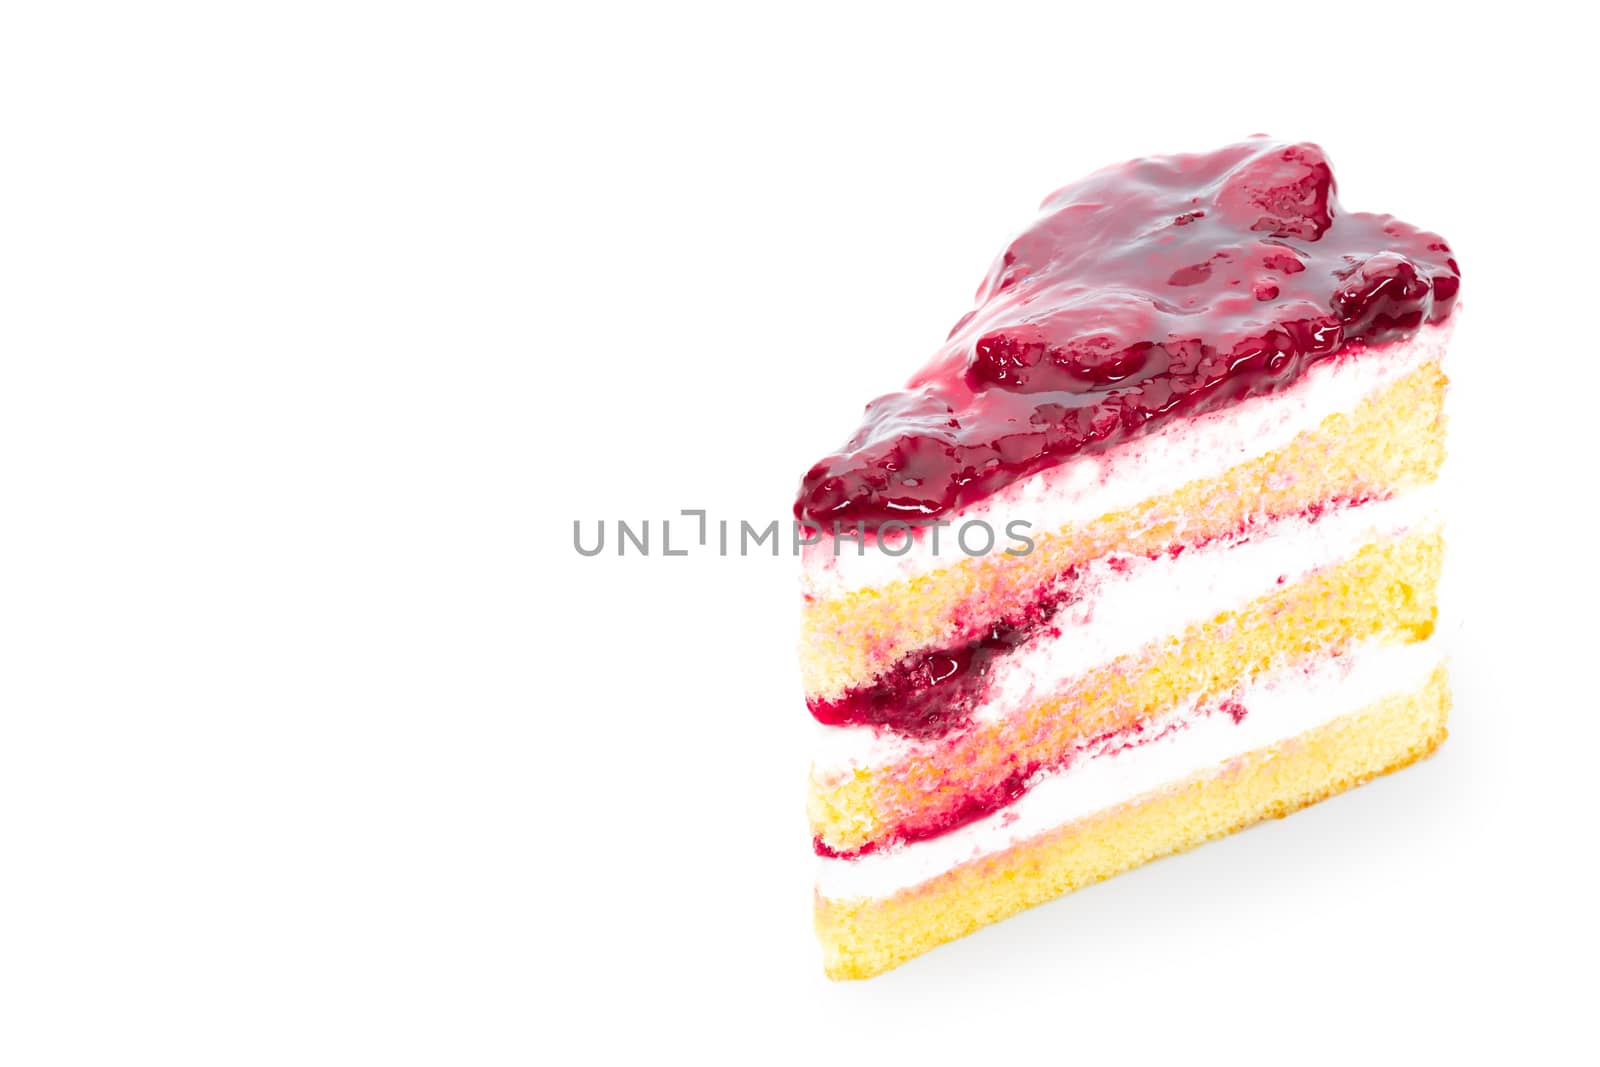 Jam Strawberry Cake on a white background by sompongtom